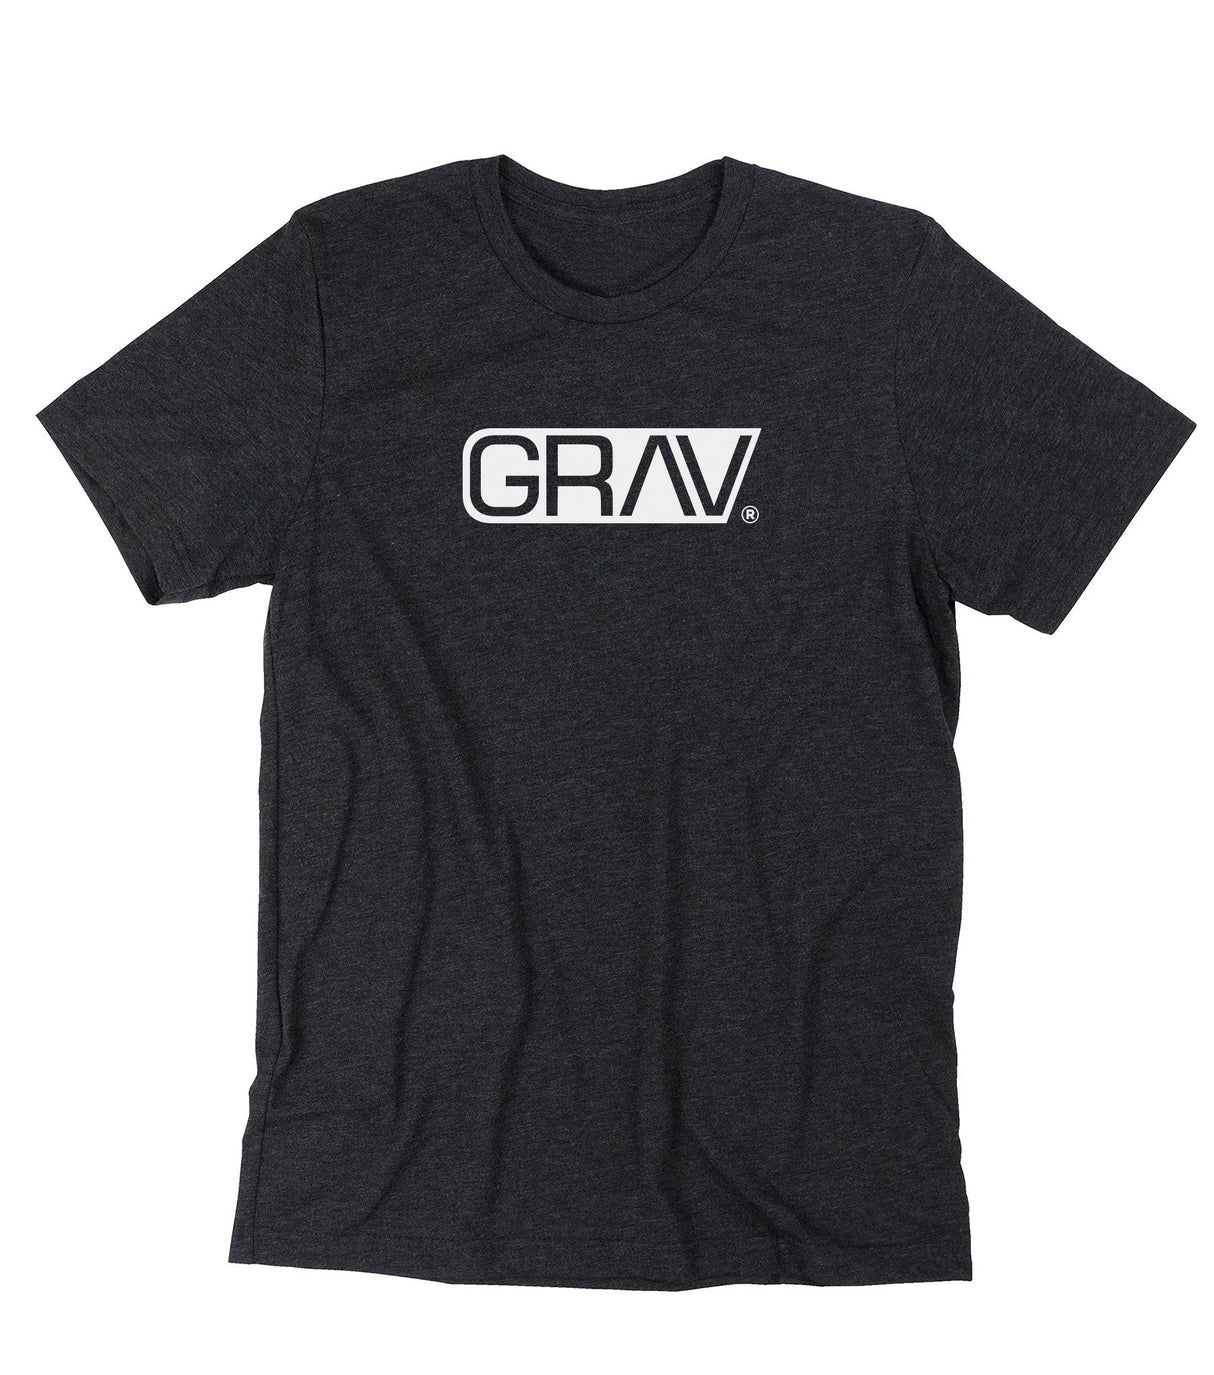 GRAV Heather Black Logo T-shirt front view on a seamless white background